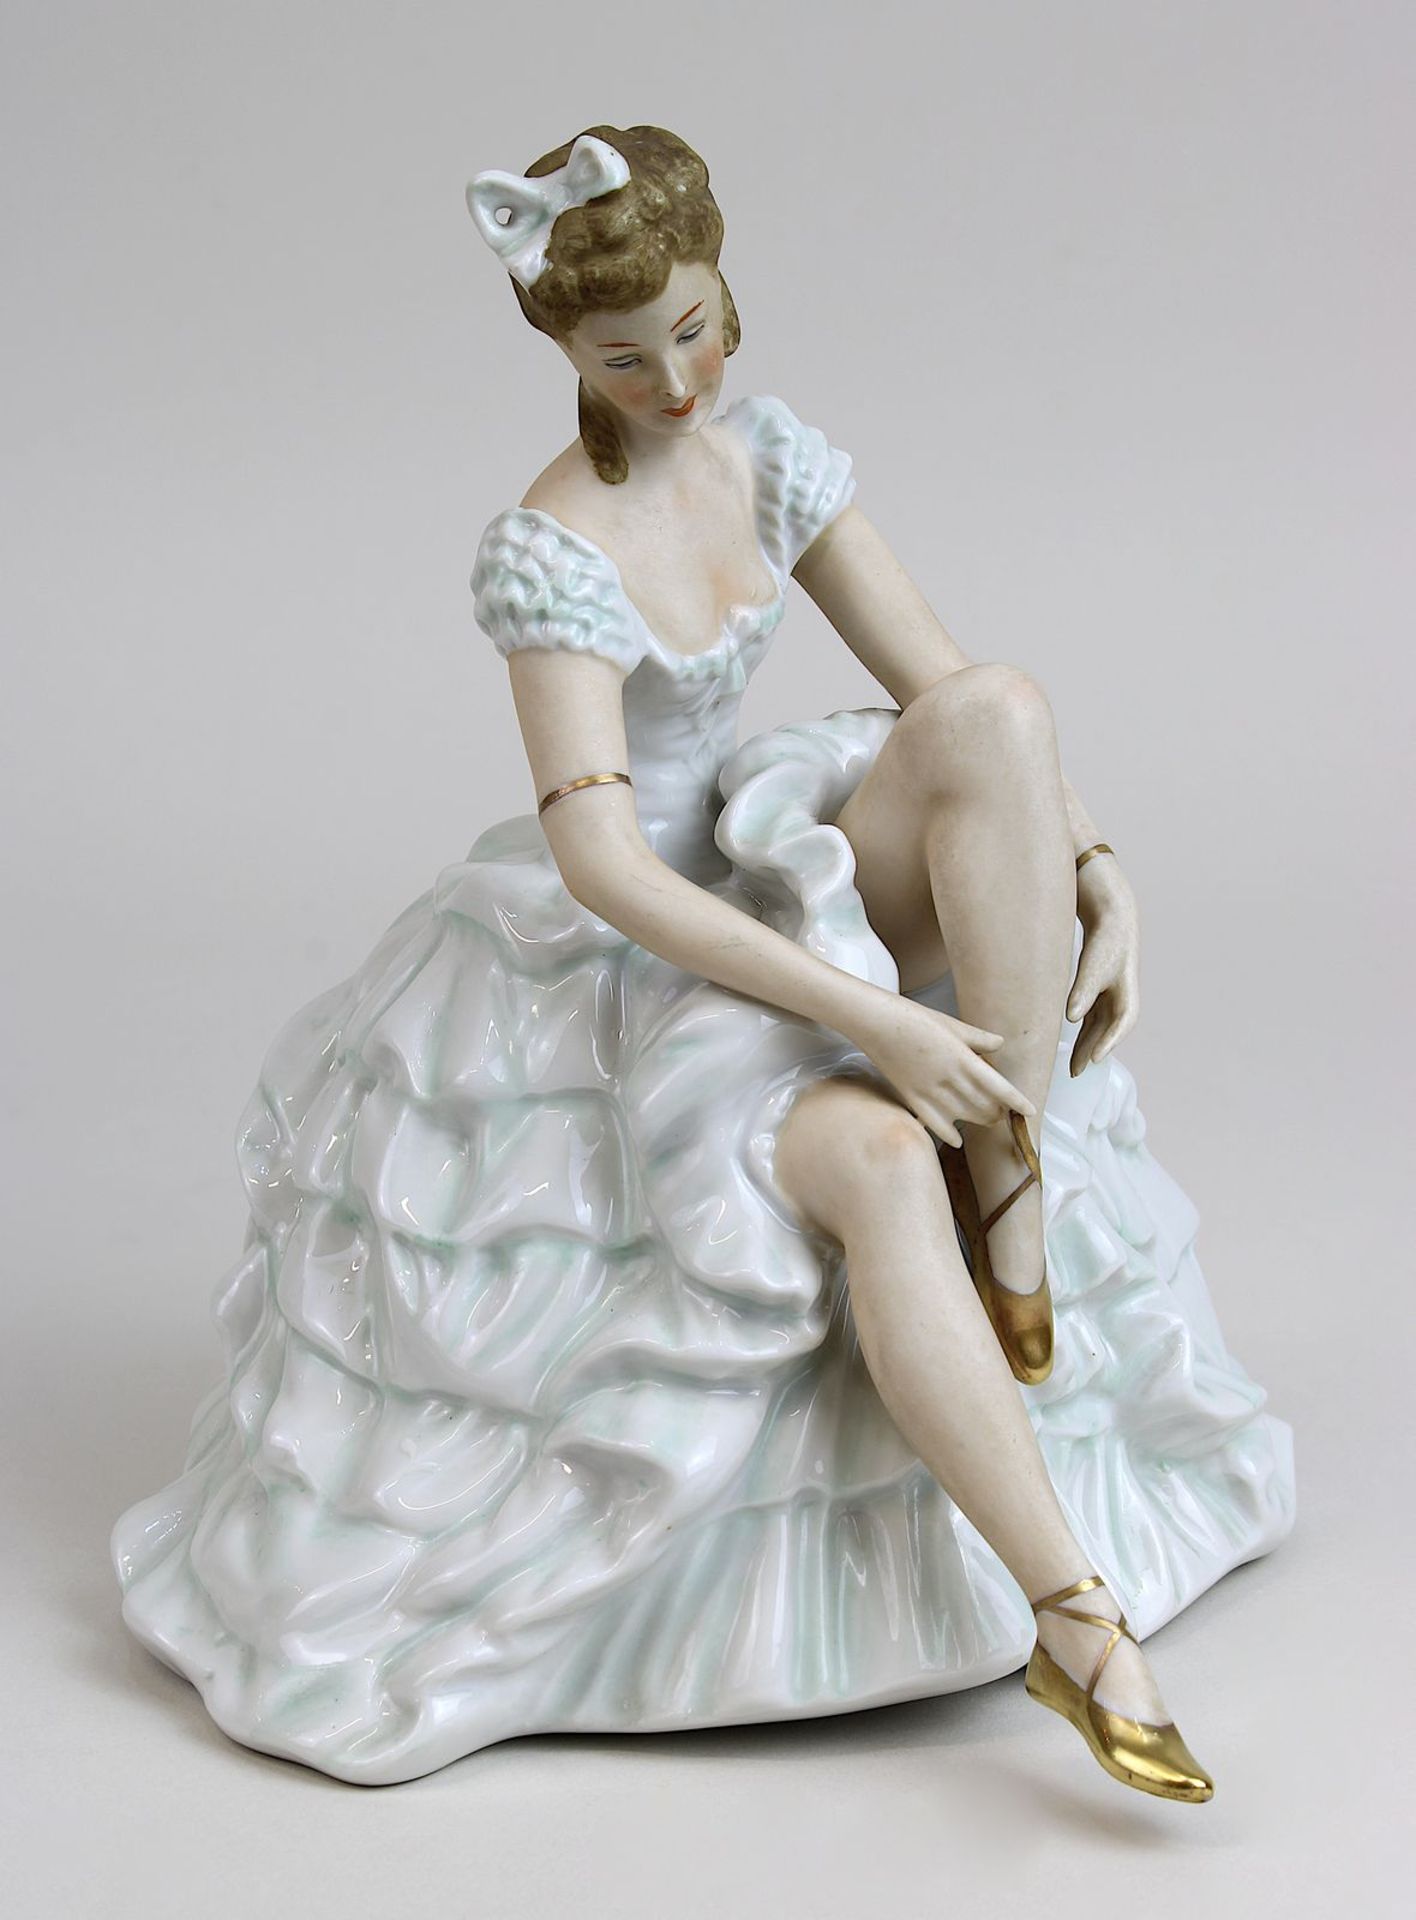 Porzellanfigur Ballerina, Schaubach Kunst, Wallendorf um 1950, Mod.-Nr. 1318, sitzende Ballerina